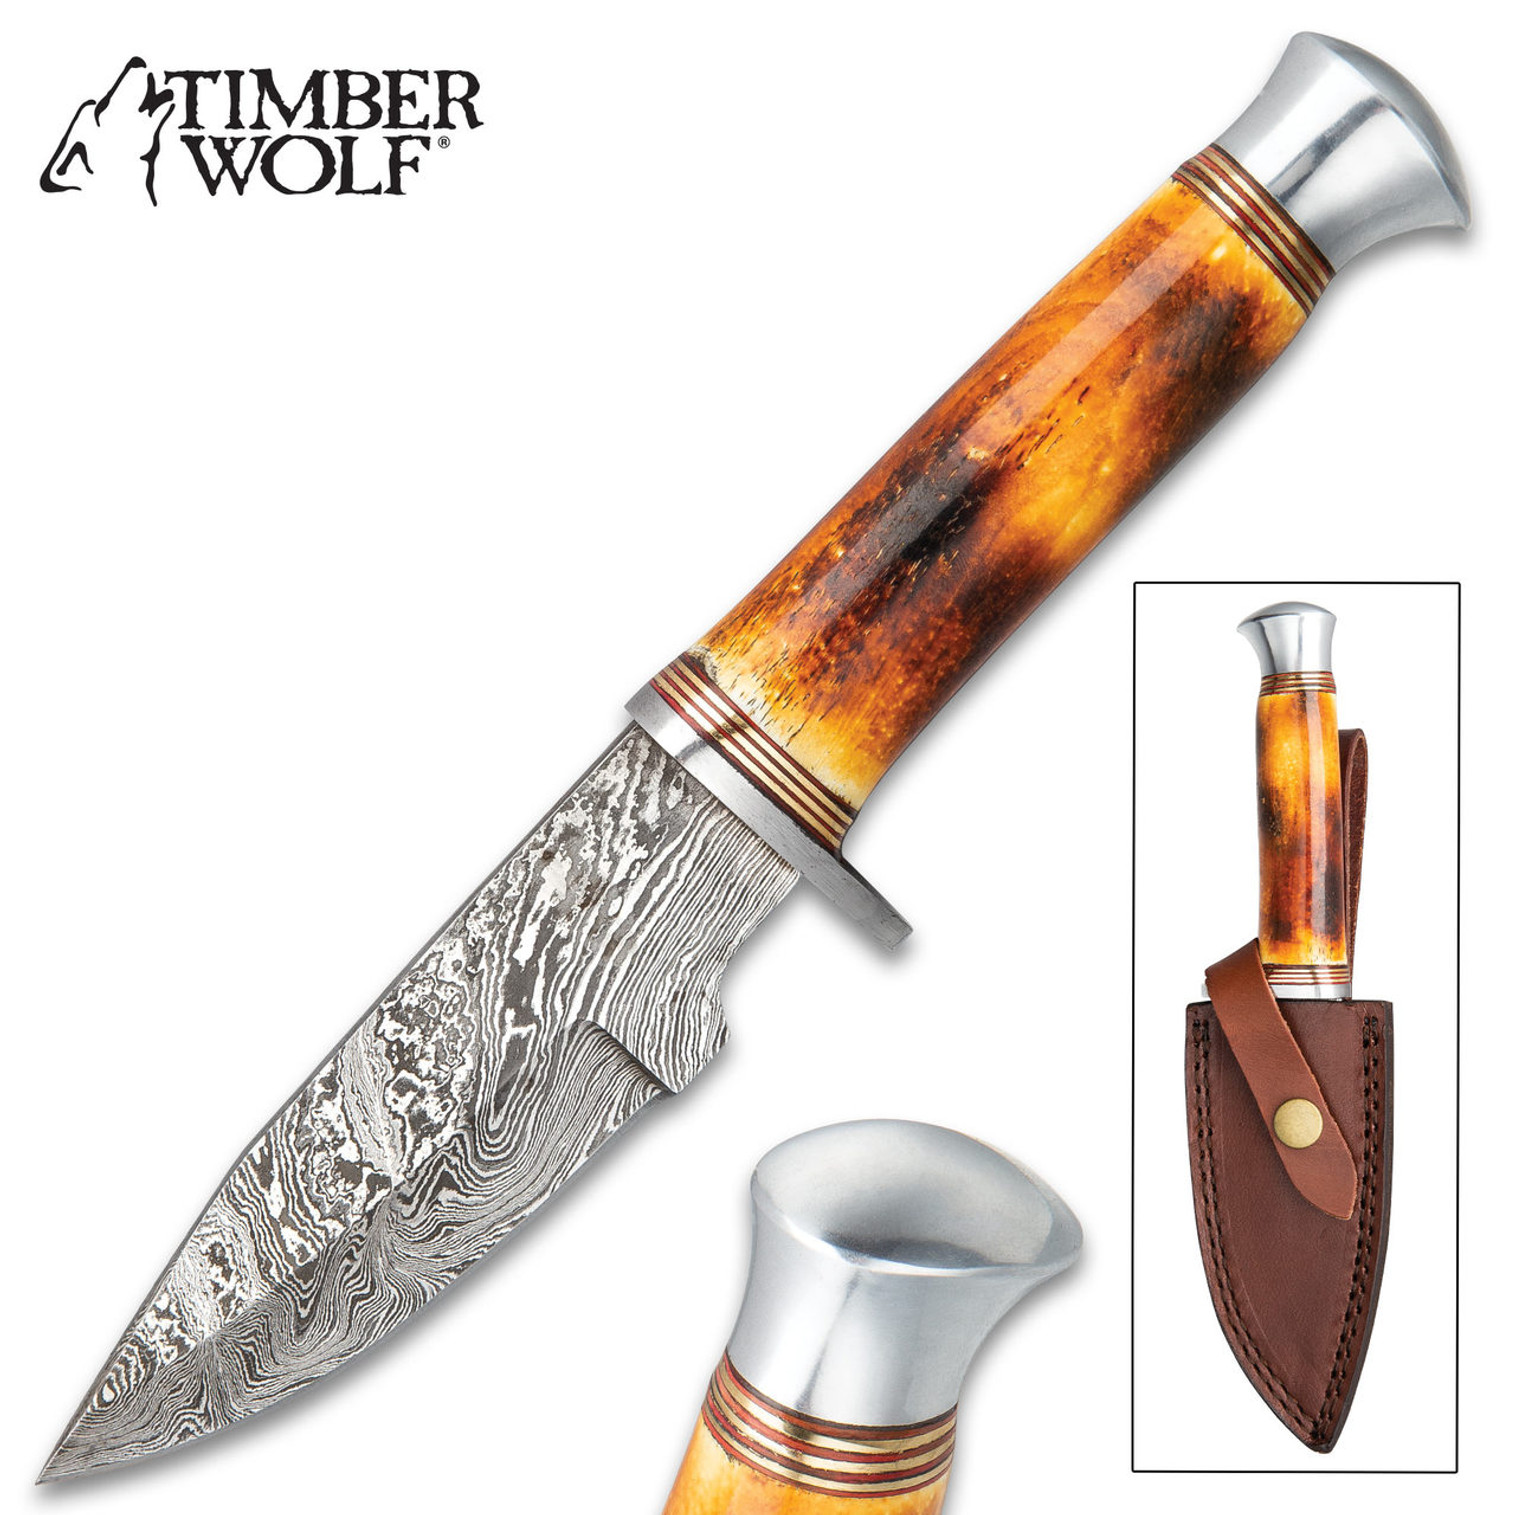 Timberwolf Australian Outback Fixed Blade Knife